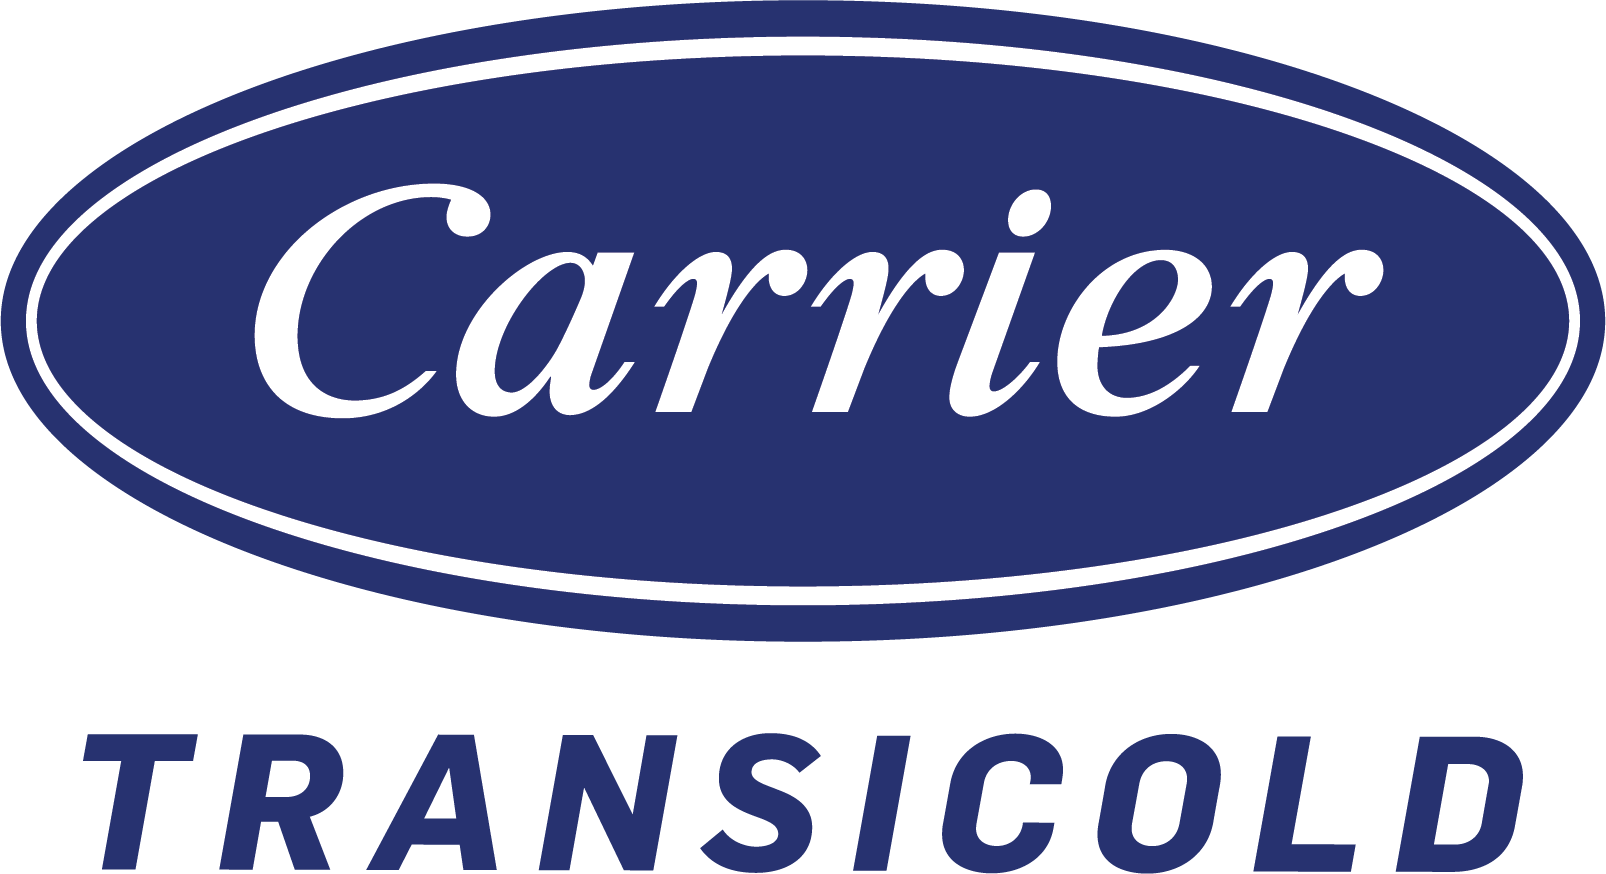 Carrier Transicold Logo